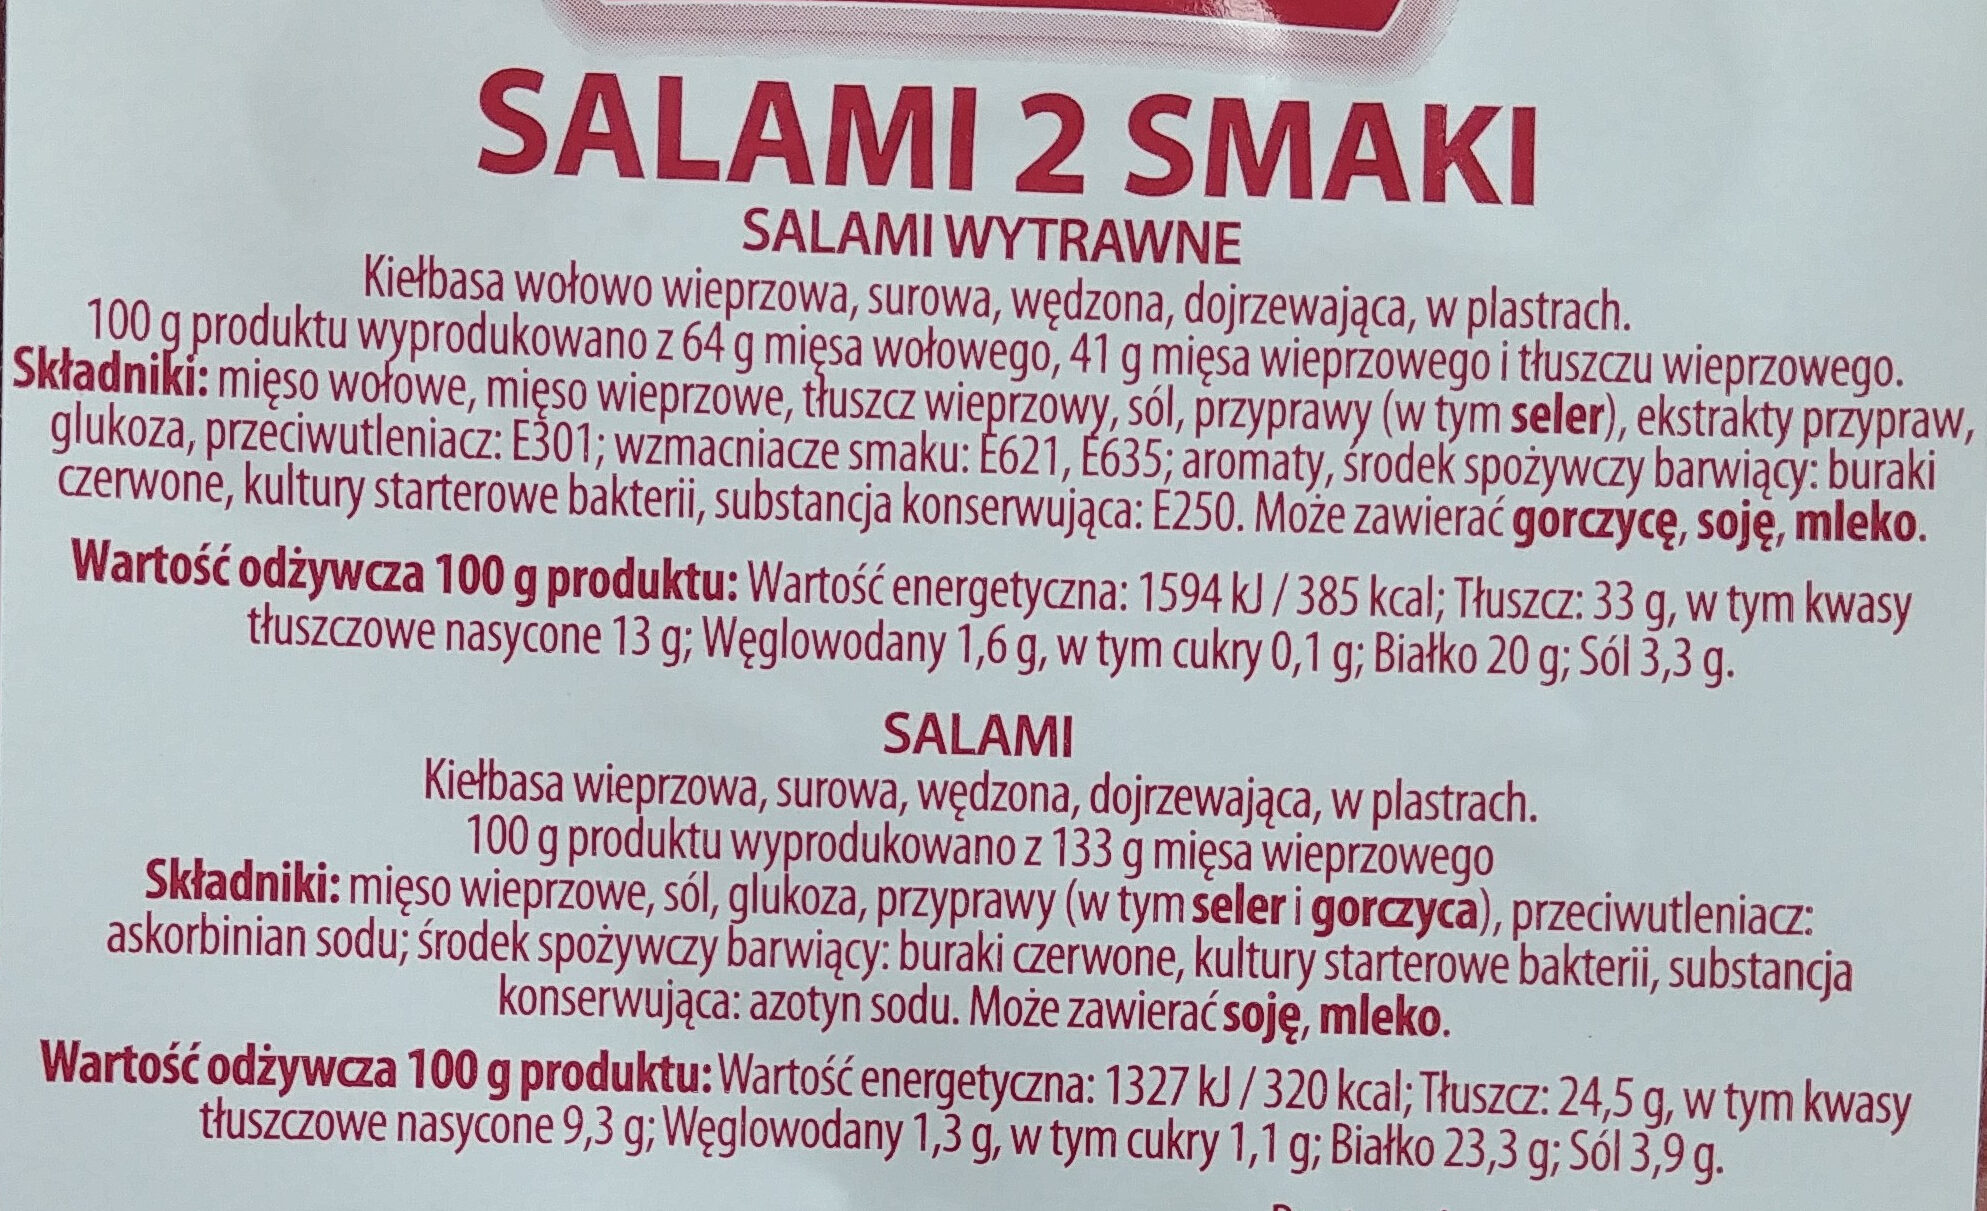 Salami 2 smaki. (Salami wytrawne, Salami) - Ingredients - pl